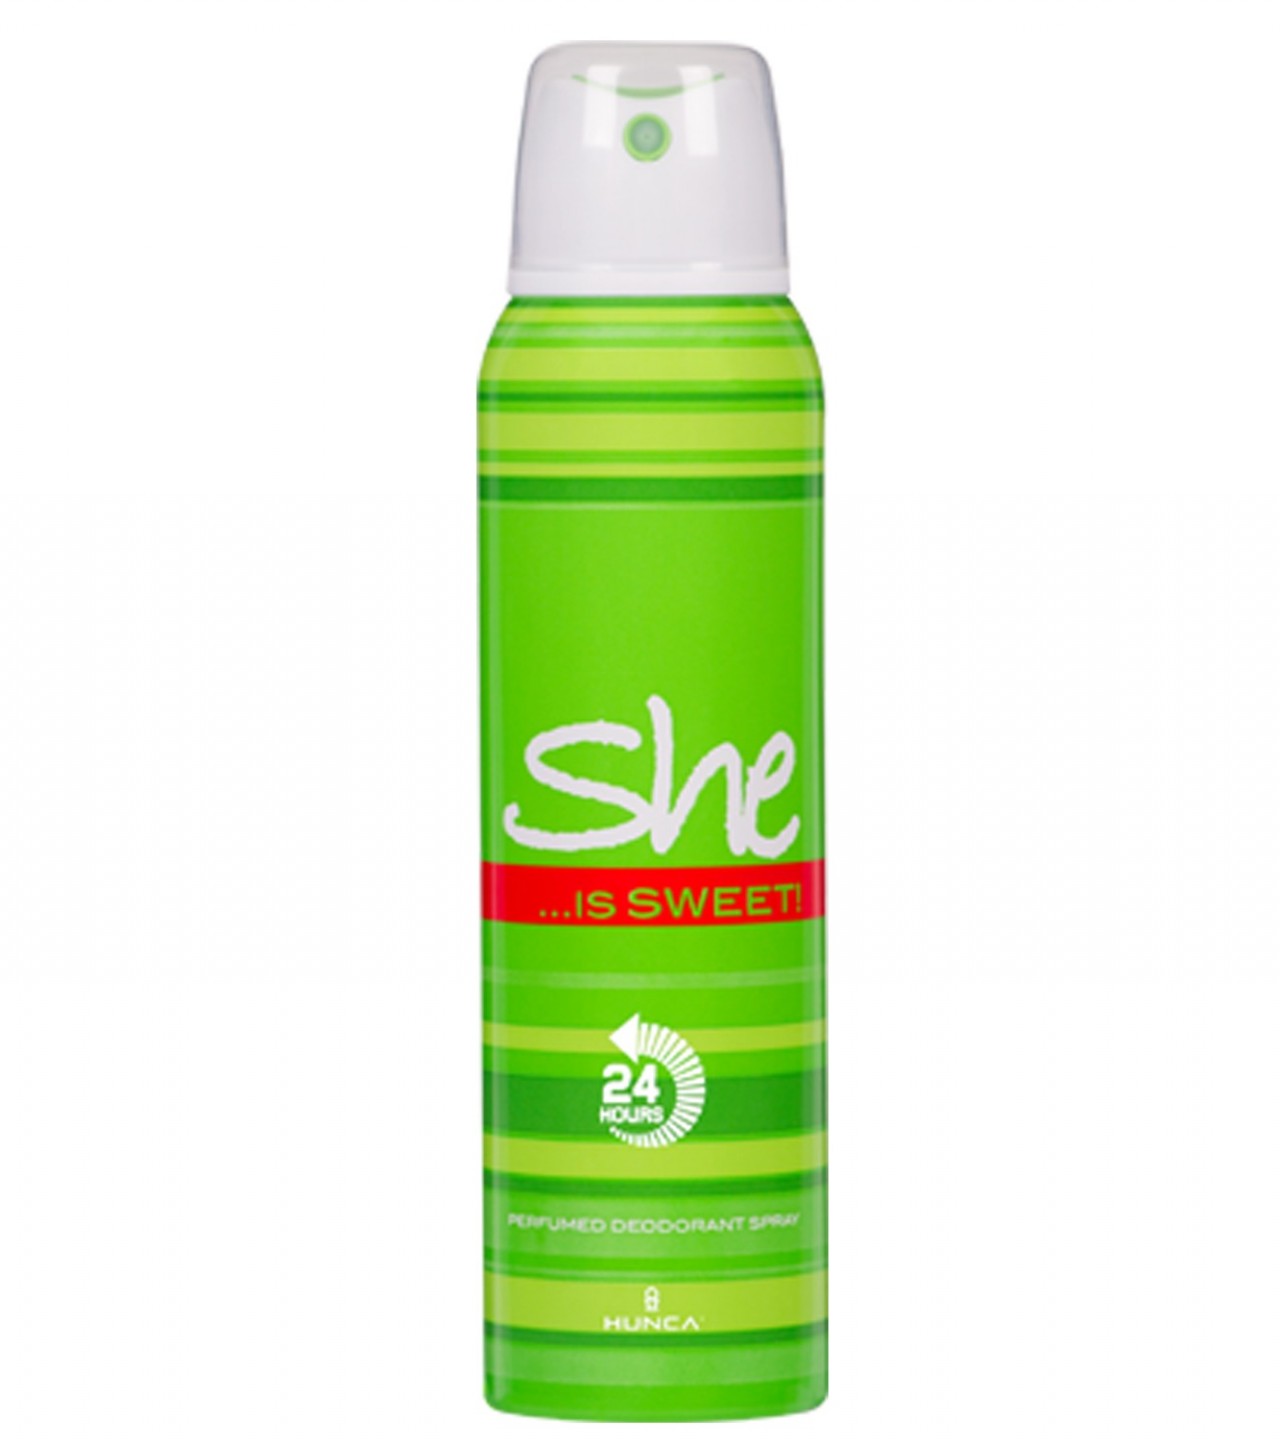 She is Sweet Body Spray Deodorant For Women - 150 ml